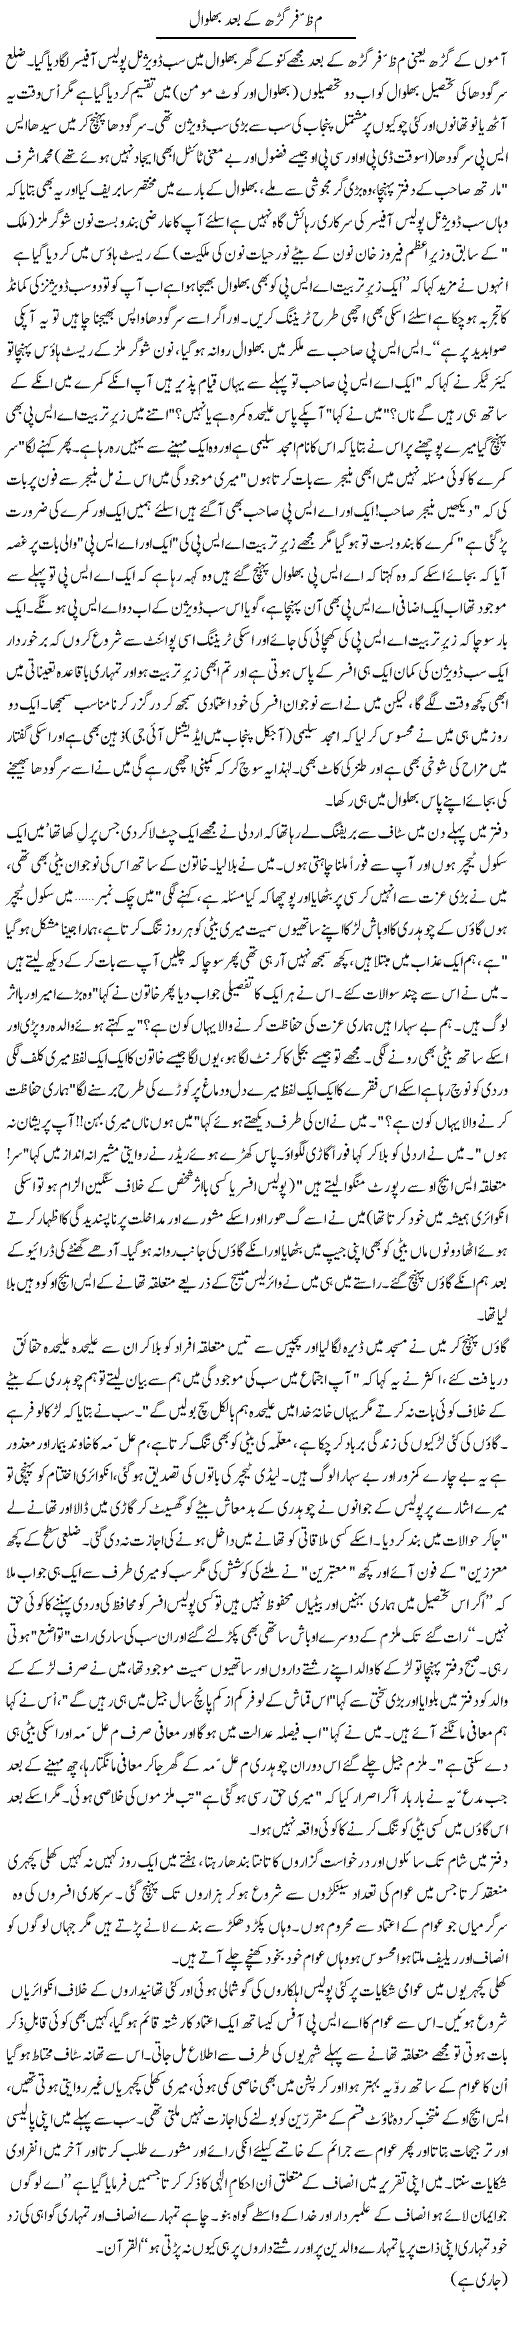 Muzaffargarh ke baad bhalwal | Zulfiqar Ahmed Cheema | Daily Urdu Columns